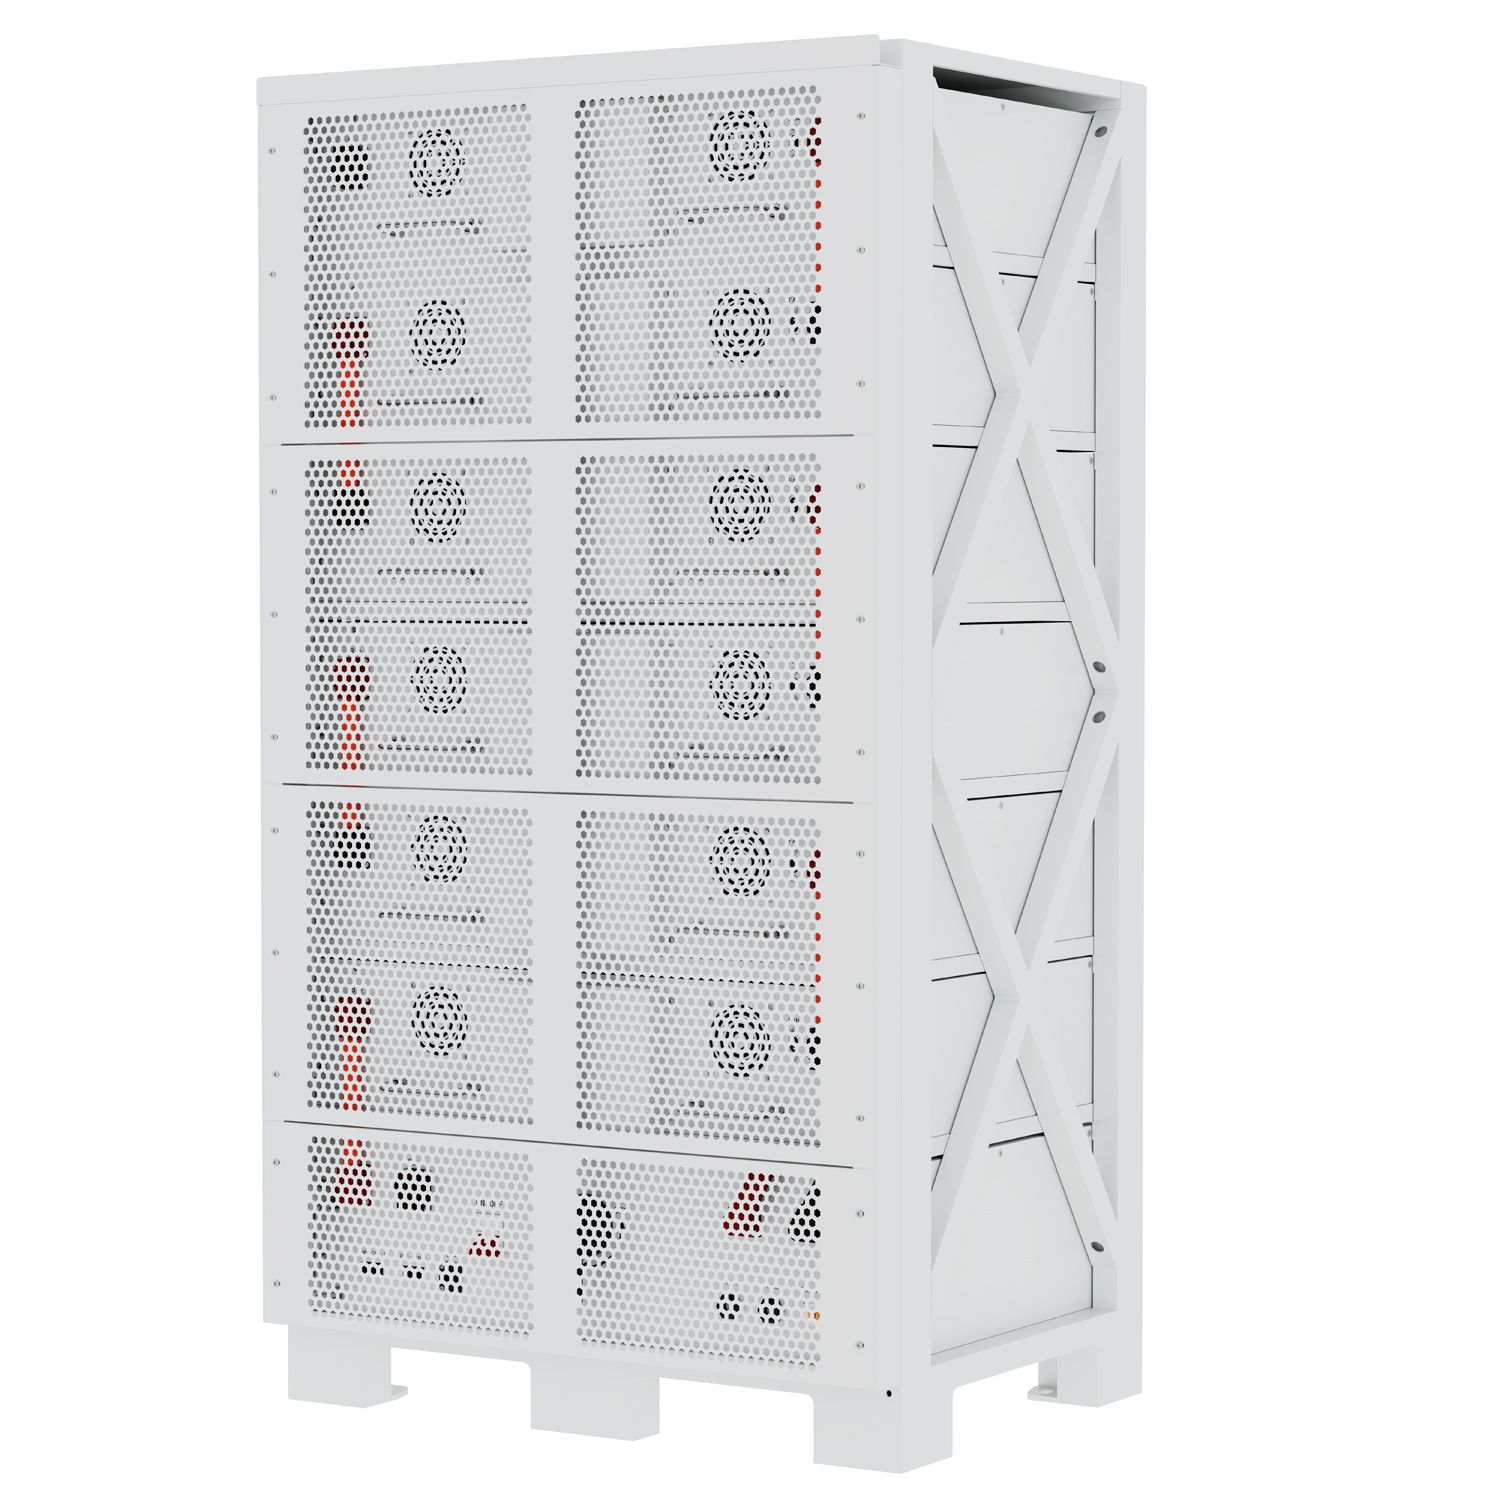 46KWH HV-460V100AH High Voltage Battery Energy Storage Solution